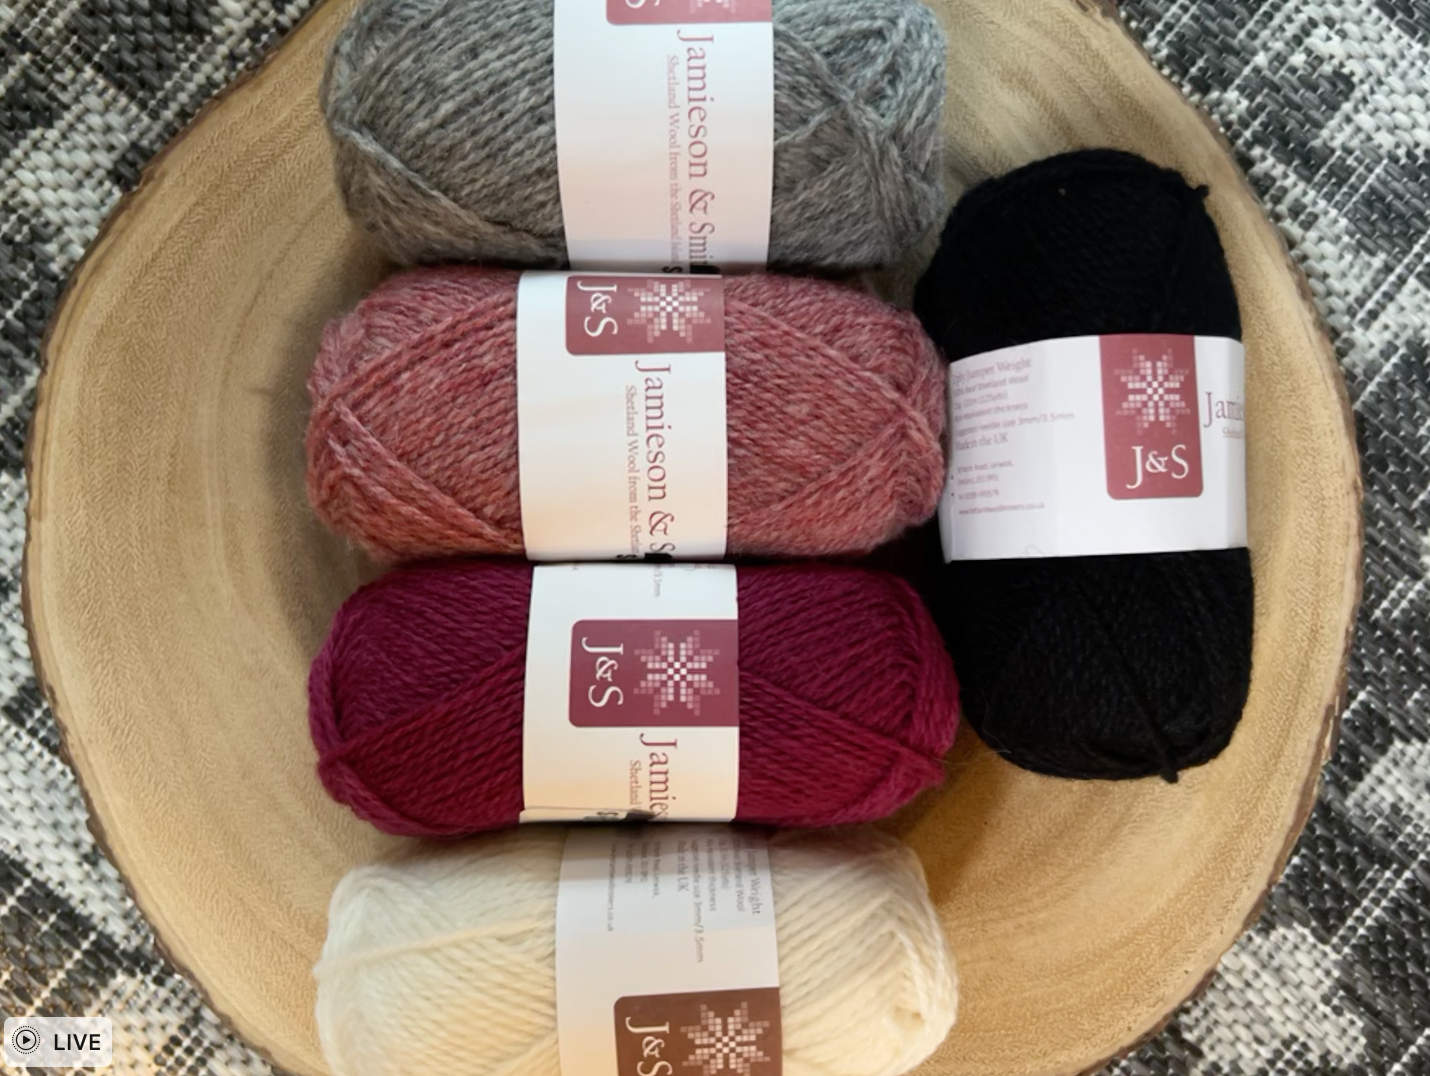 Shetland wool yarn packs-Centifolia Hat Yarn Pack - 9 colors of Jamieson's  Shetland Spindrift to knit ladies Fair Isle hat